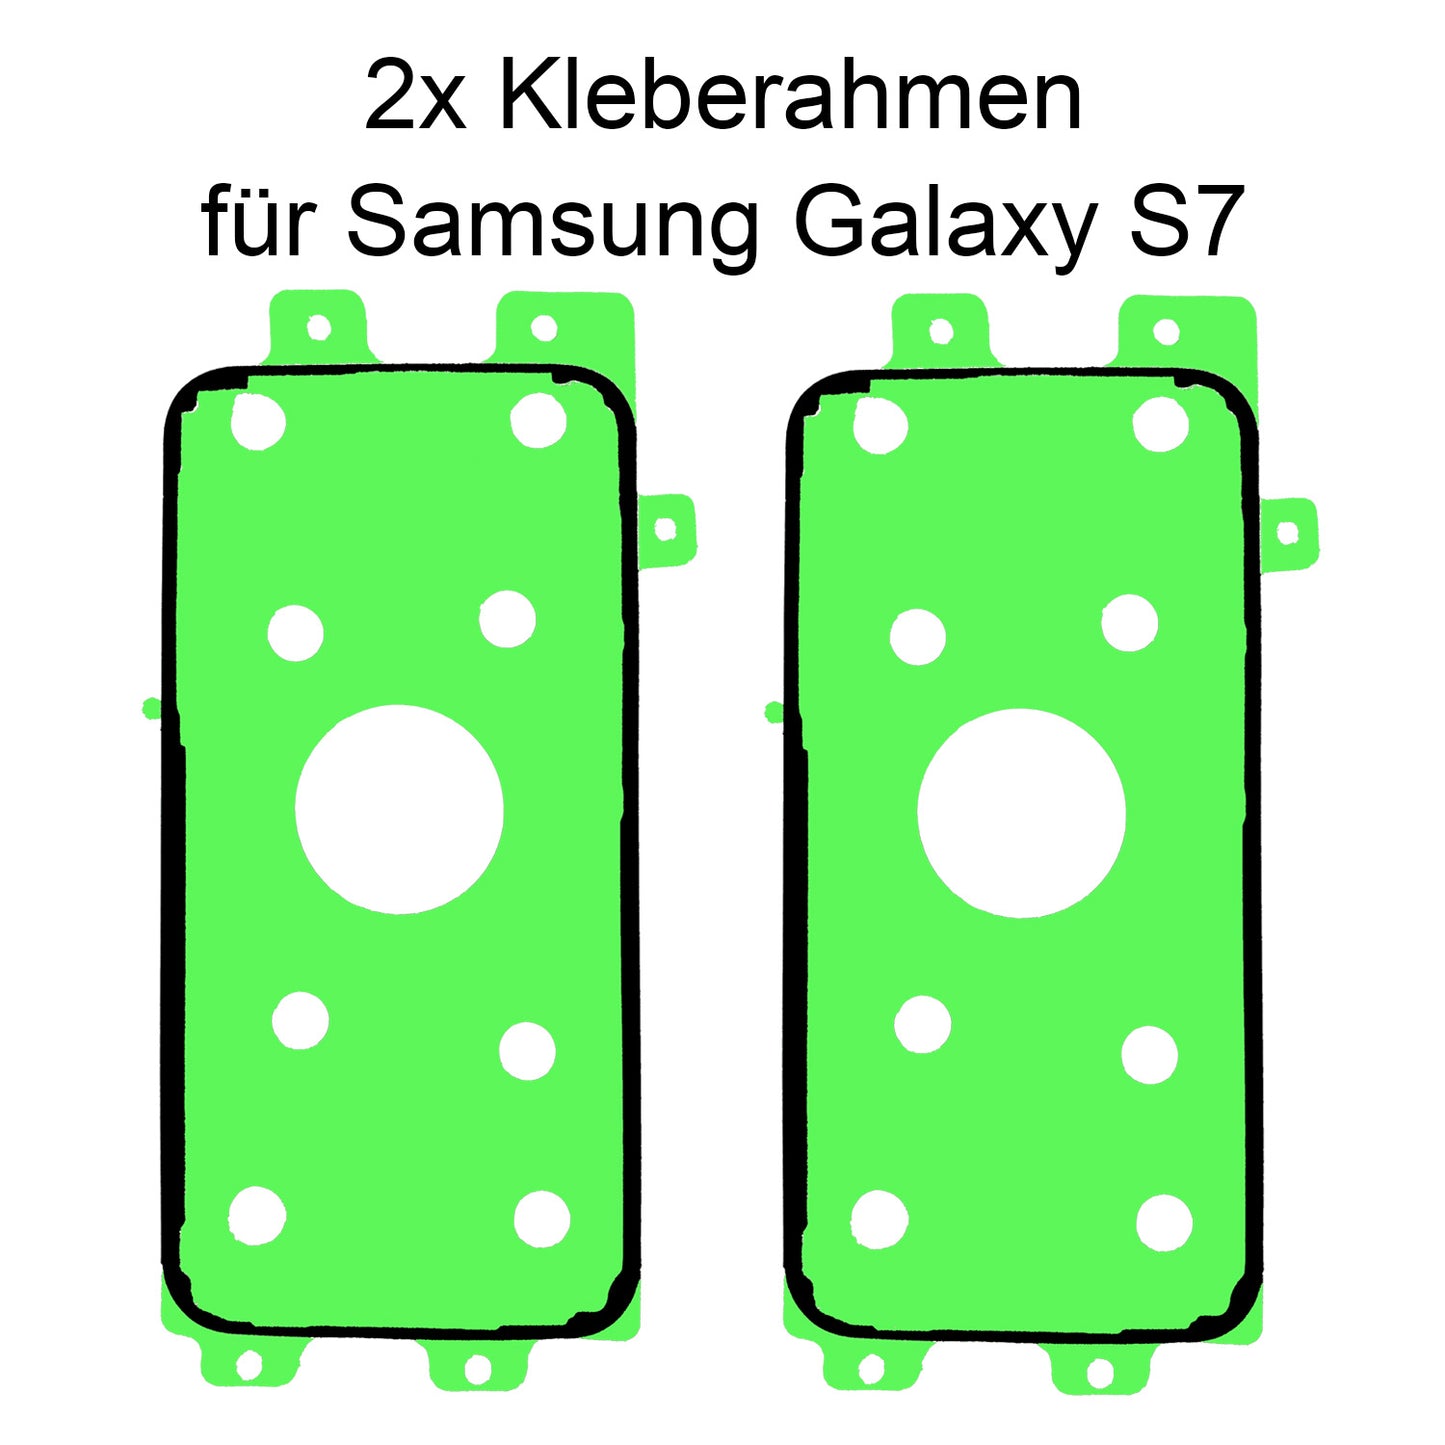 2x Samsung Galaxy S7 Rahmen Display Kleber Klebepad Adhesive Wasser Dichtung Kleberahmen Rahmenkleber - dinngs